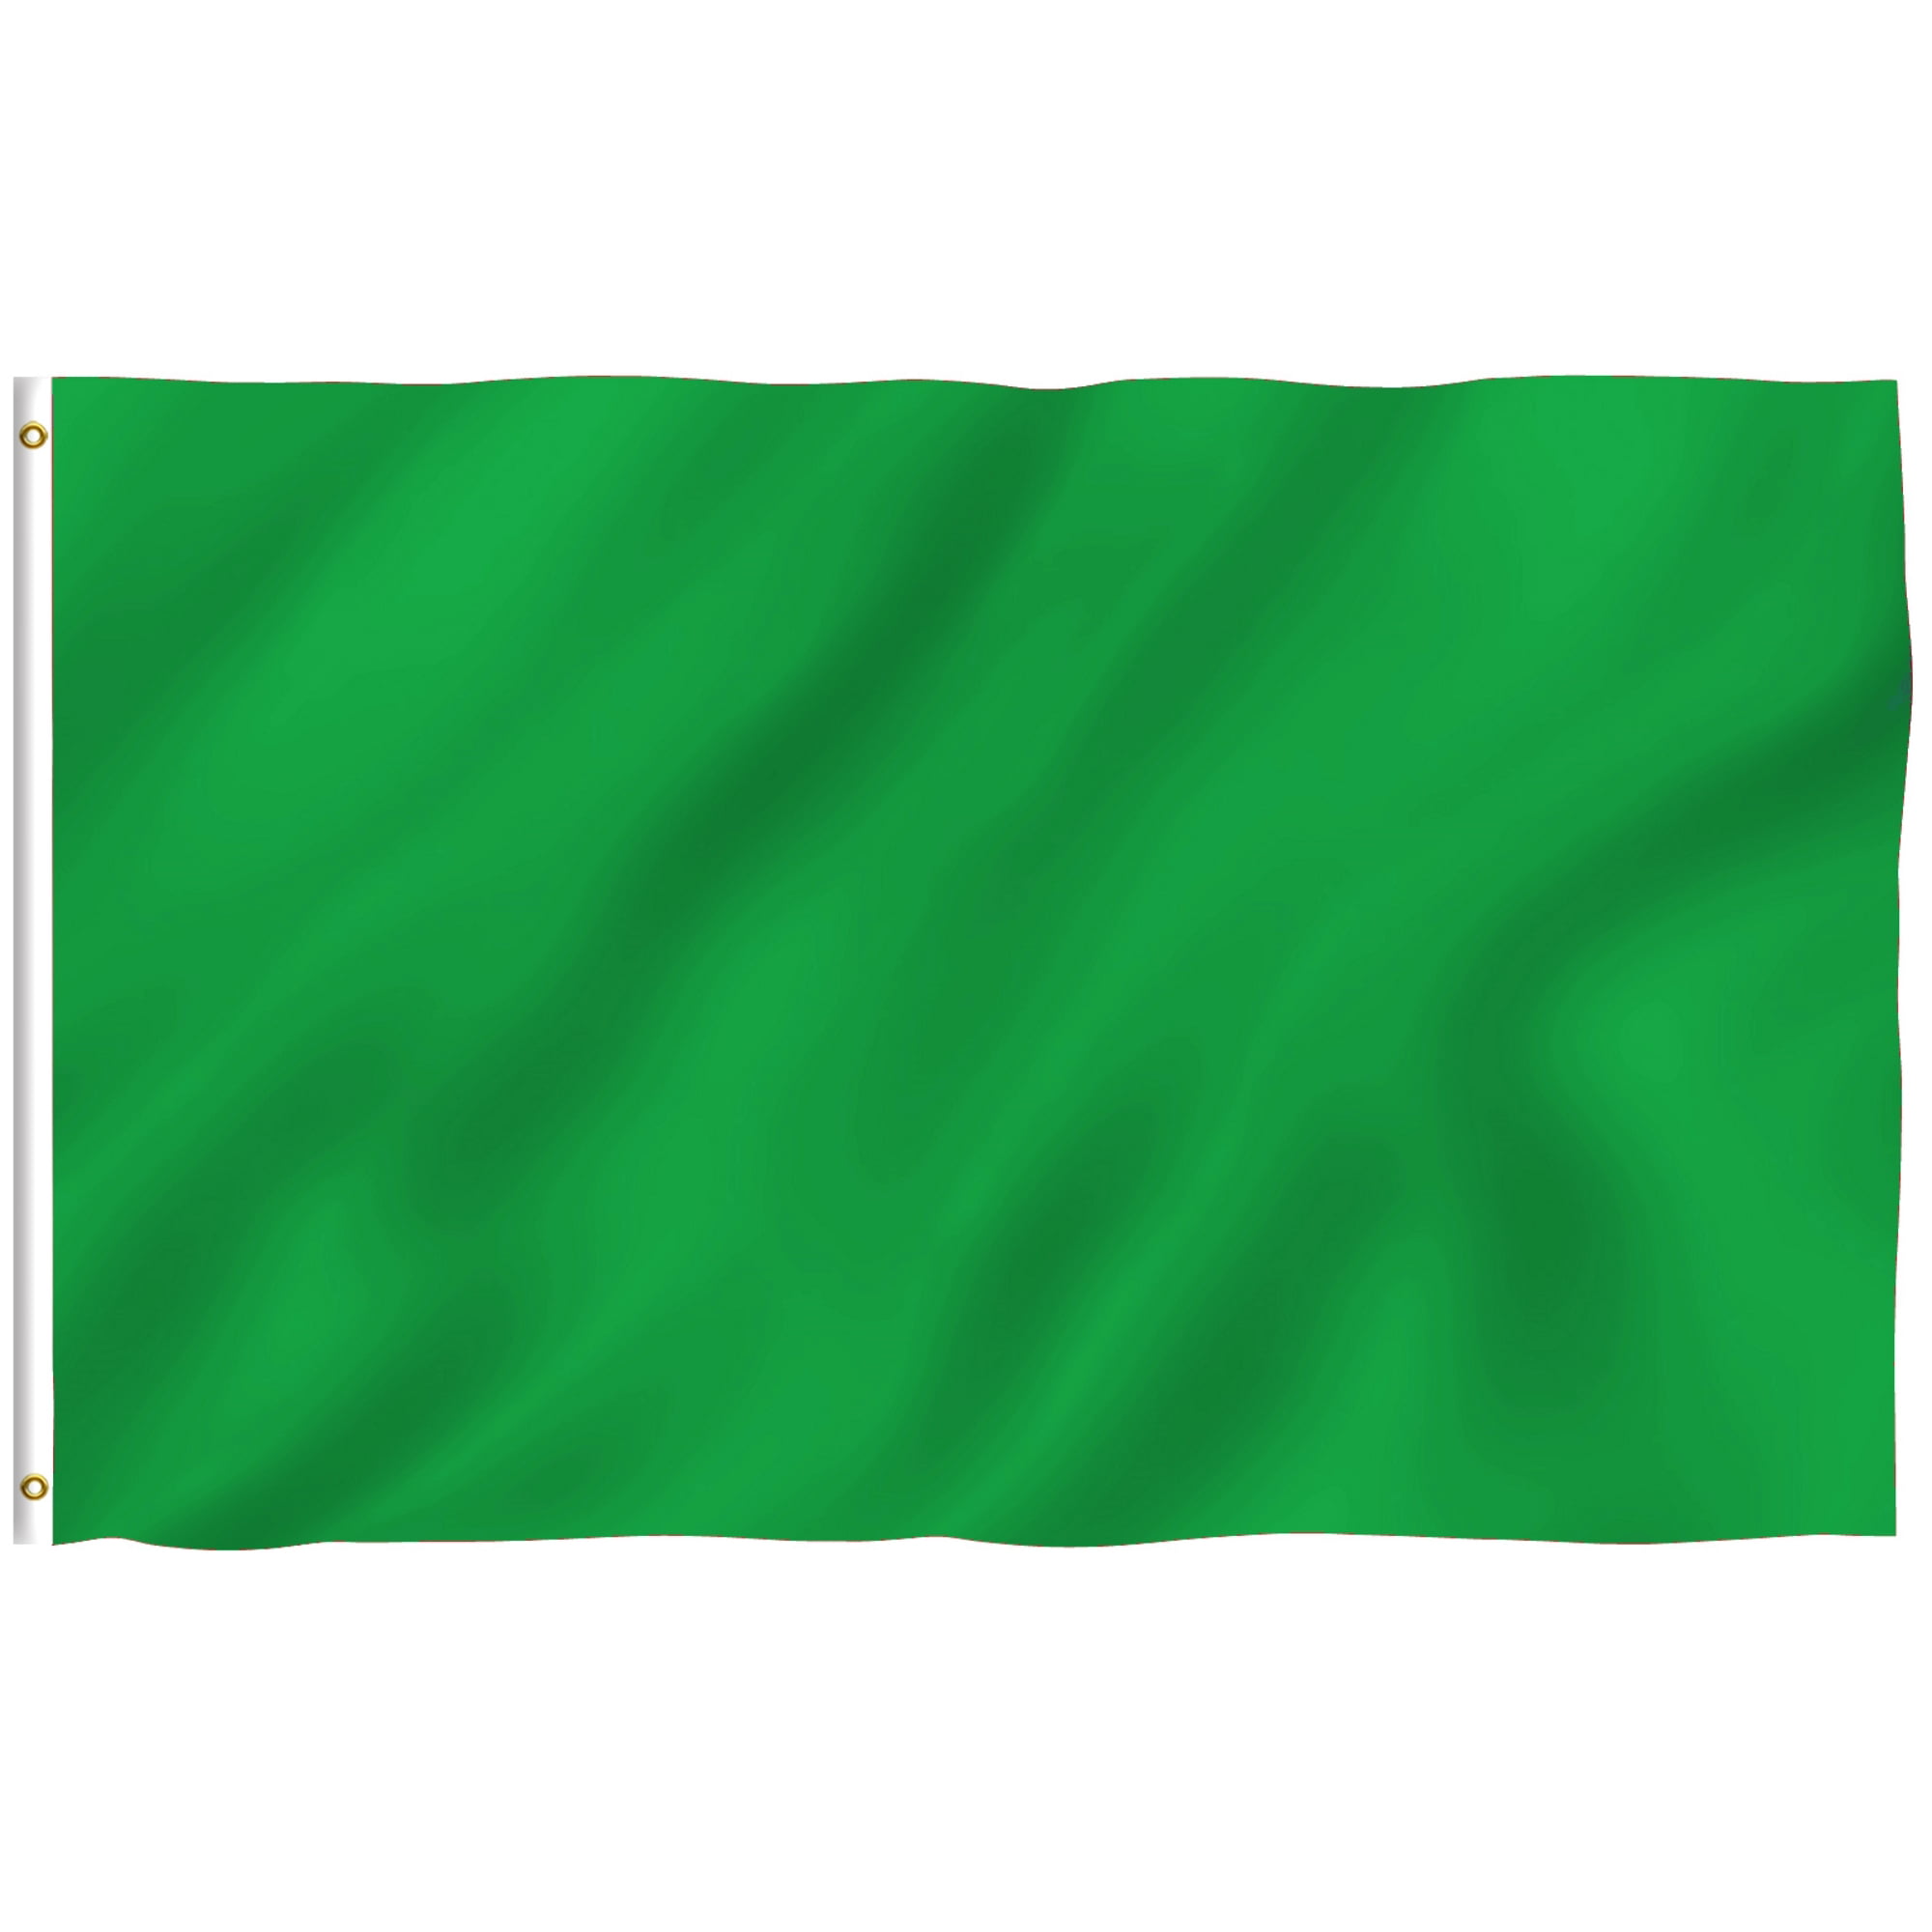 Как называется флаг зелено белый. Зеленый флаг. Зеленое Знамя. Зеленый флажок. Флаги с зеленым цветом.